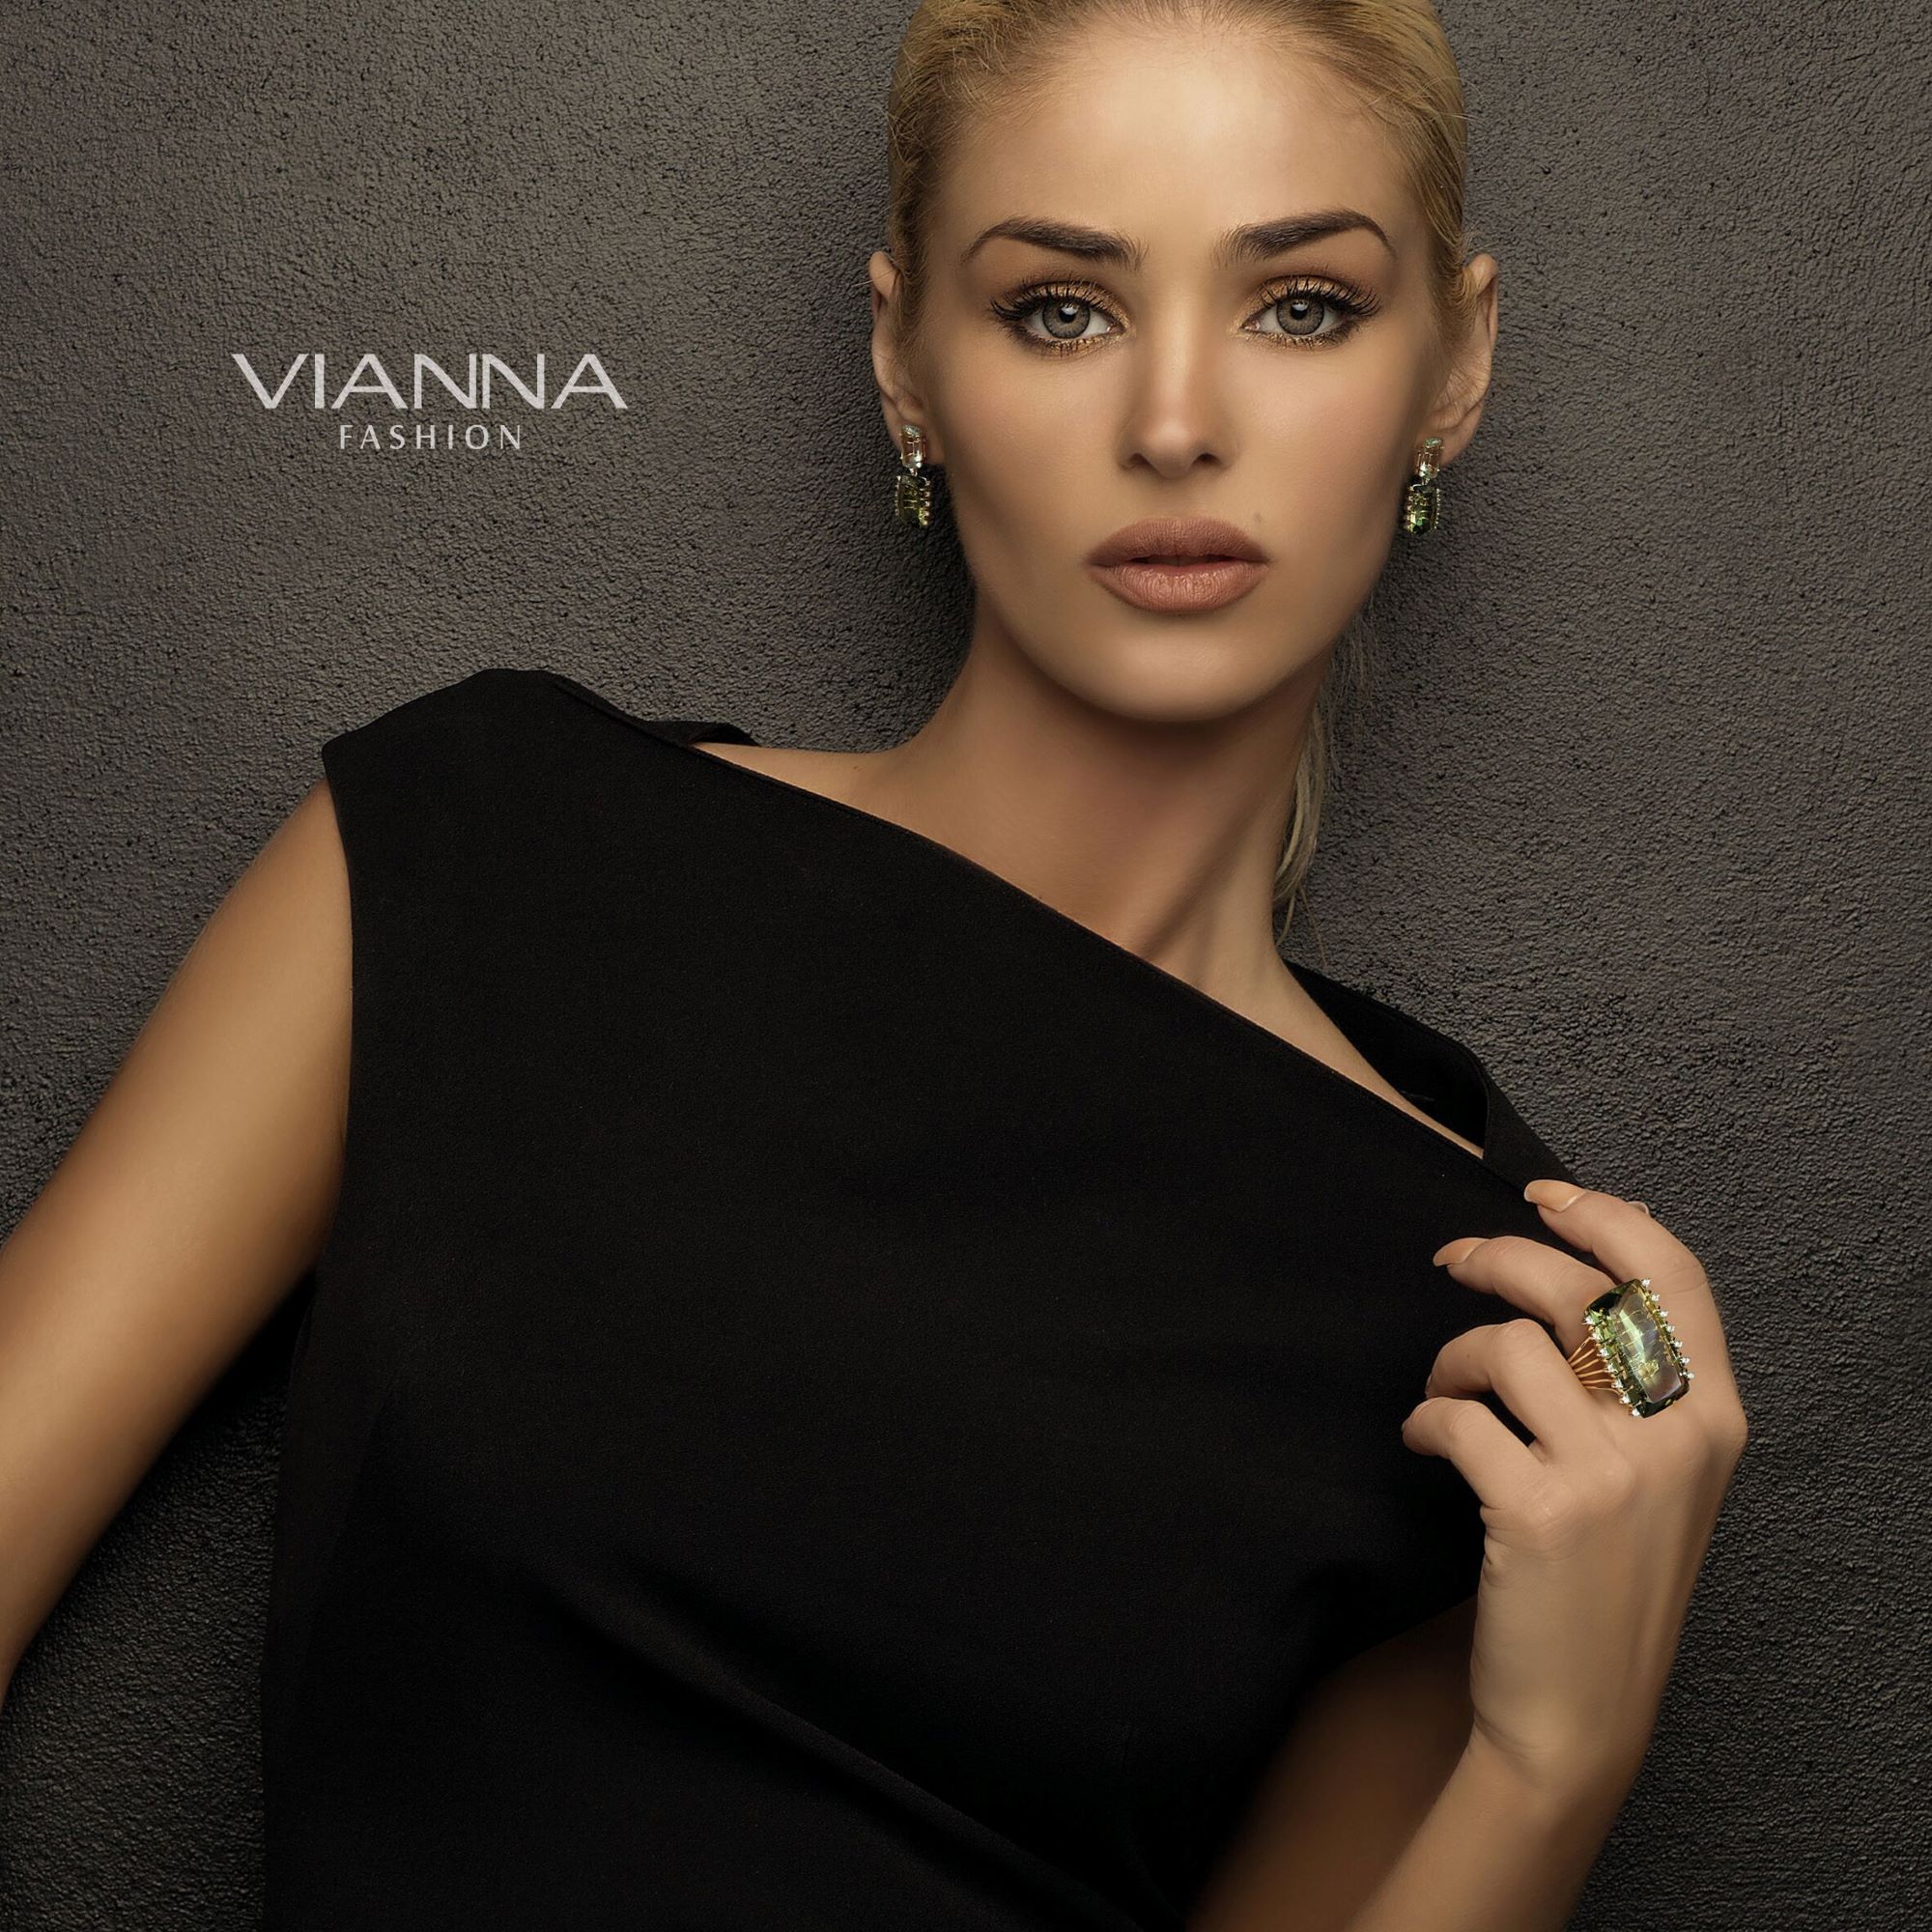 VIanna Trunk Show image resized.jpeg Vianna Fashion